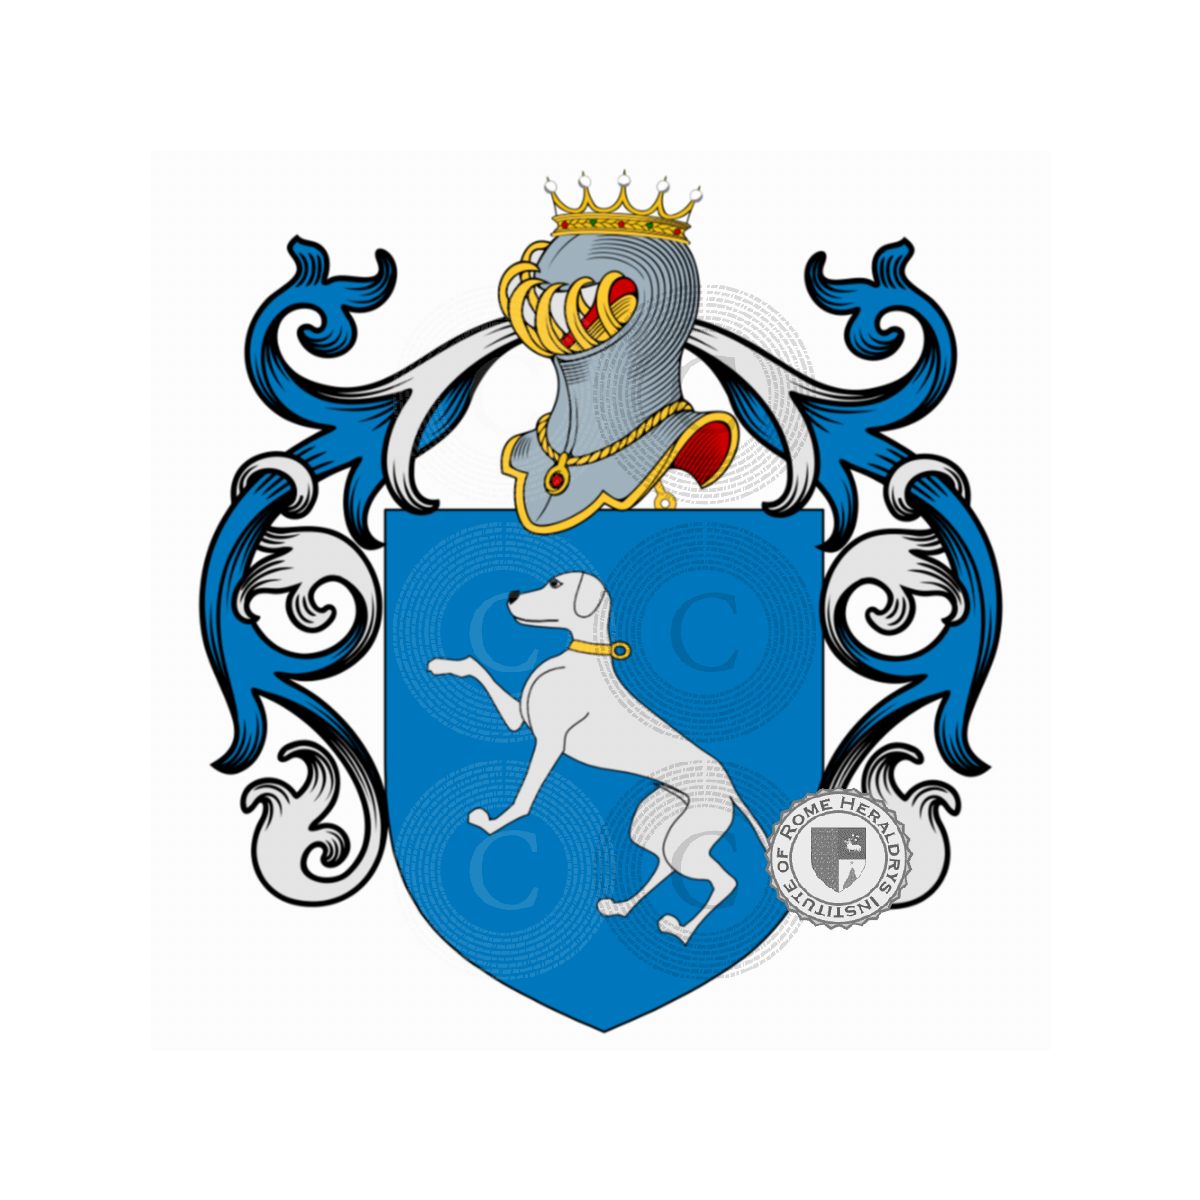 Coat of arms of familydella Bianca